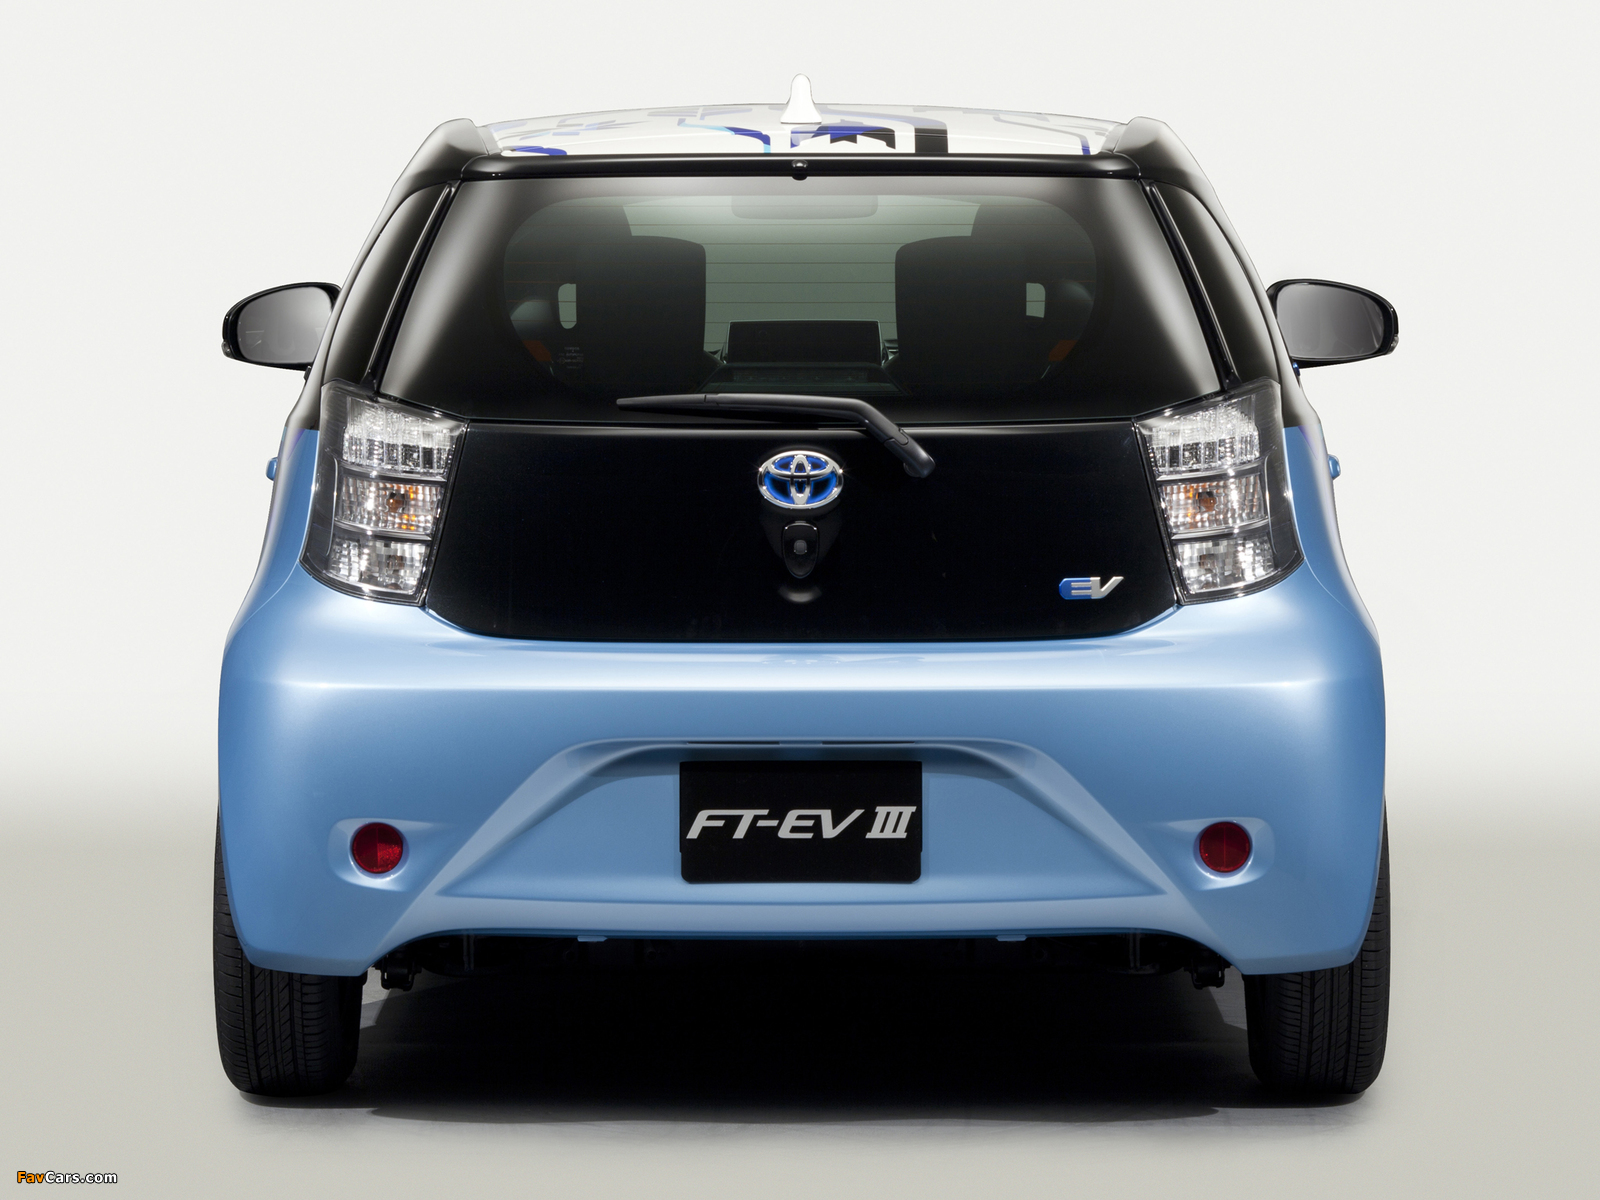 Toyota FT-EV III Concept 2011 photos (1600 x 1200)